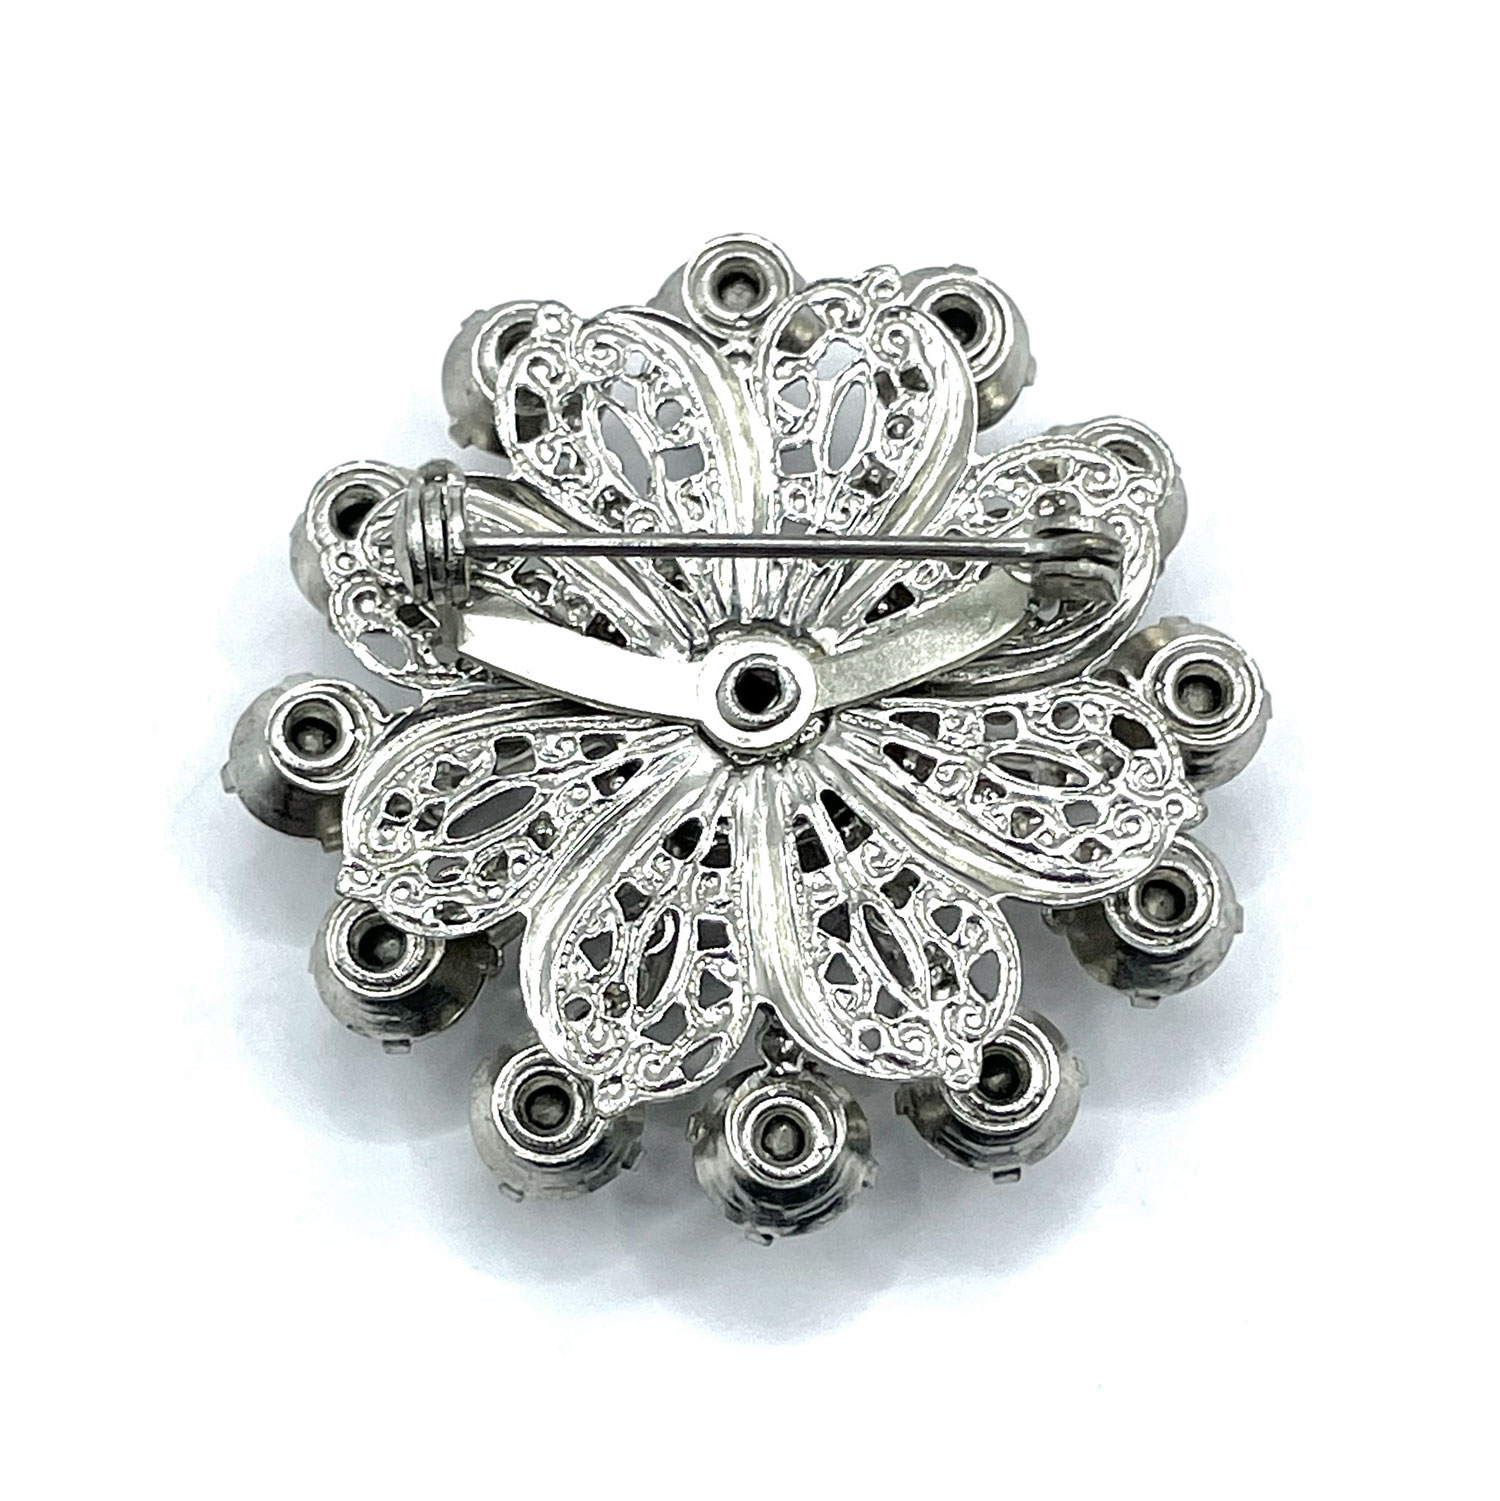 1950s rhinestone snowflake brooch